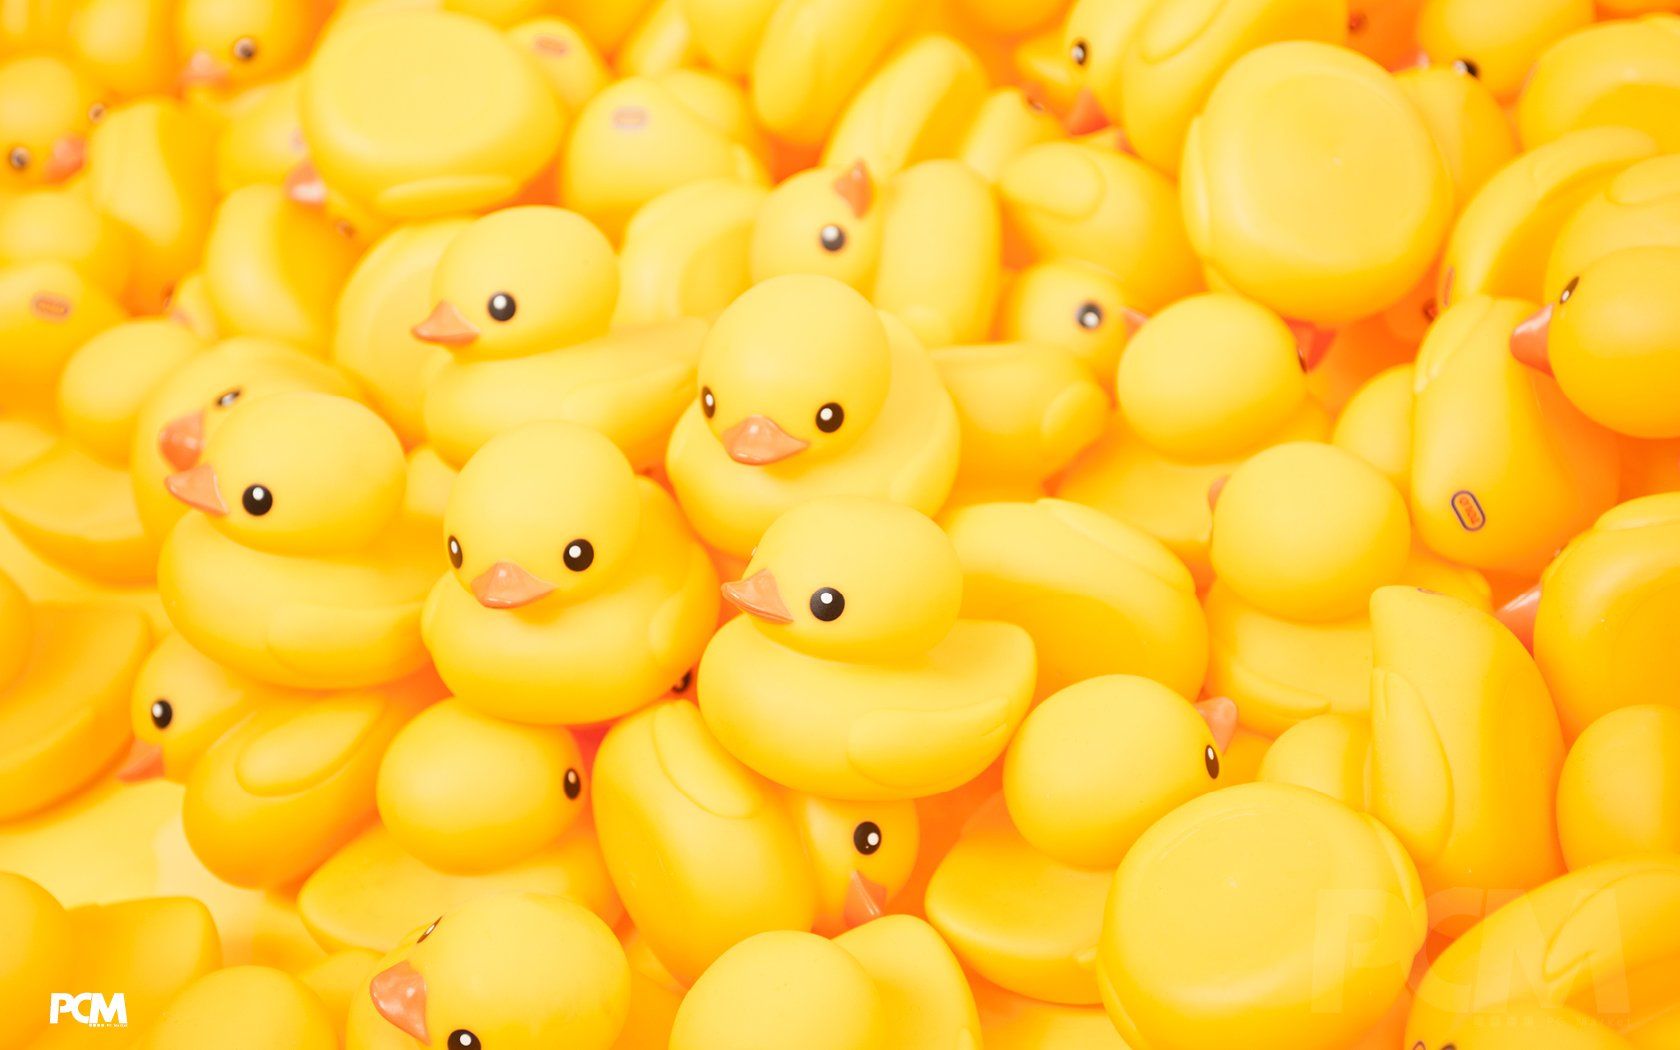 A lot of yellow rubber ducks - Duck